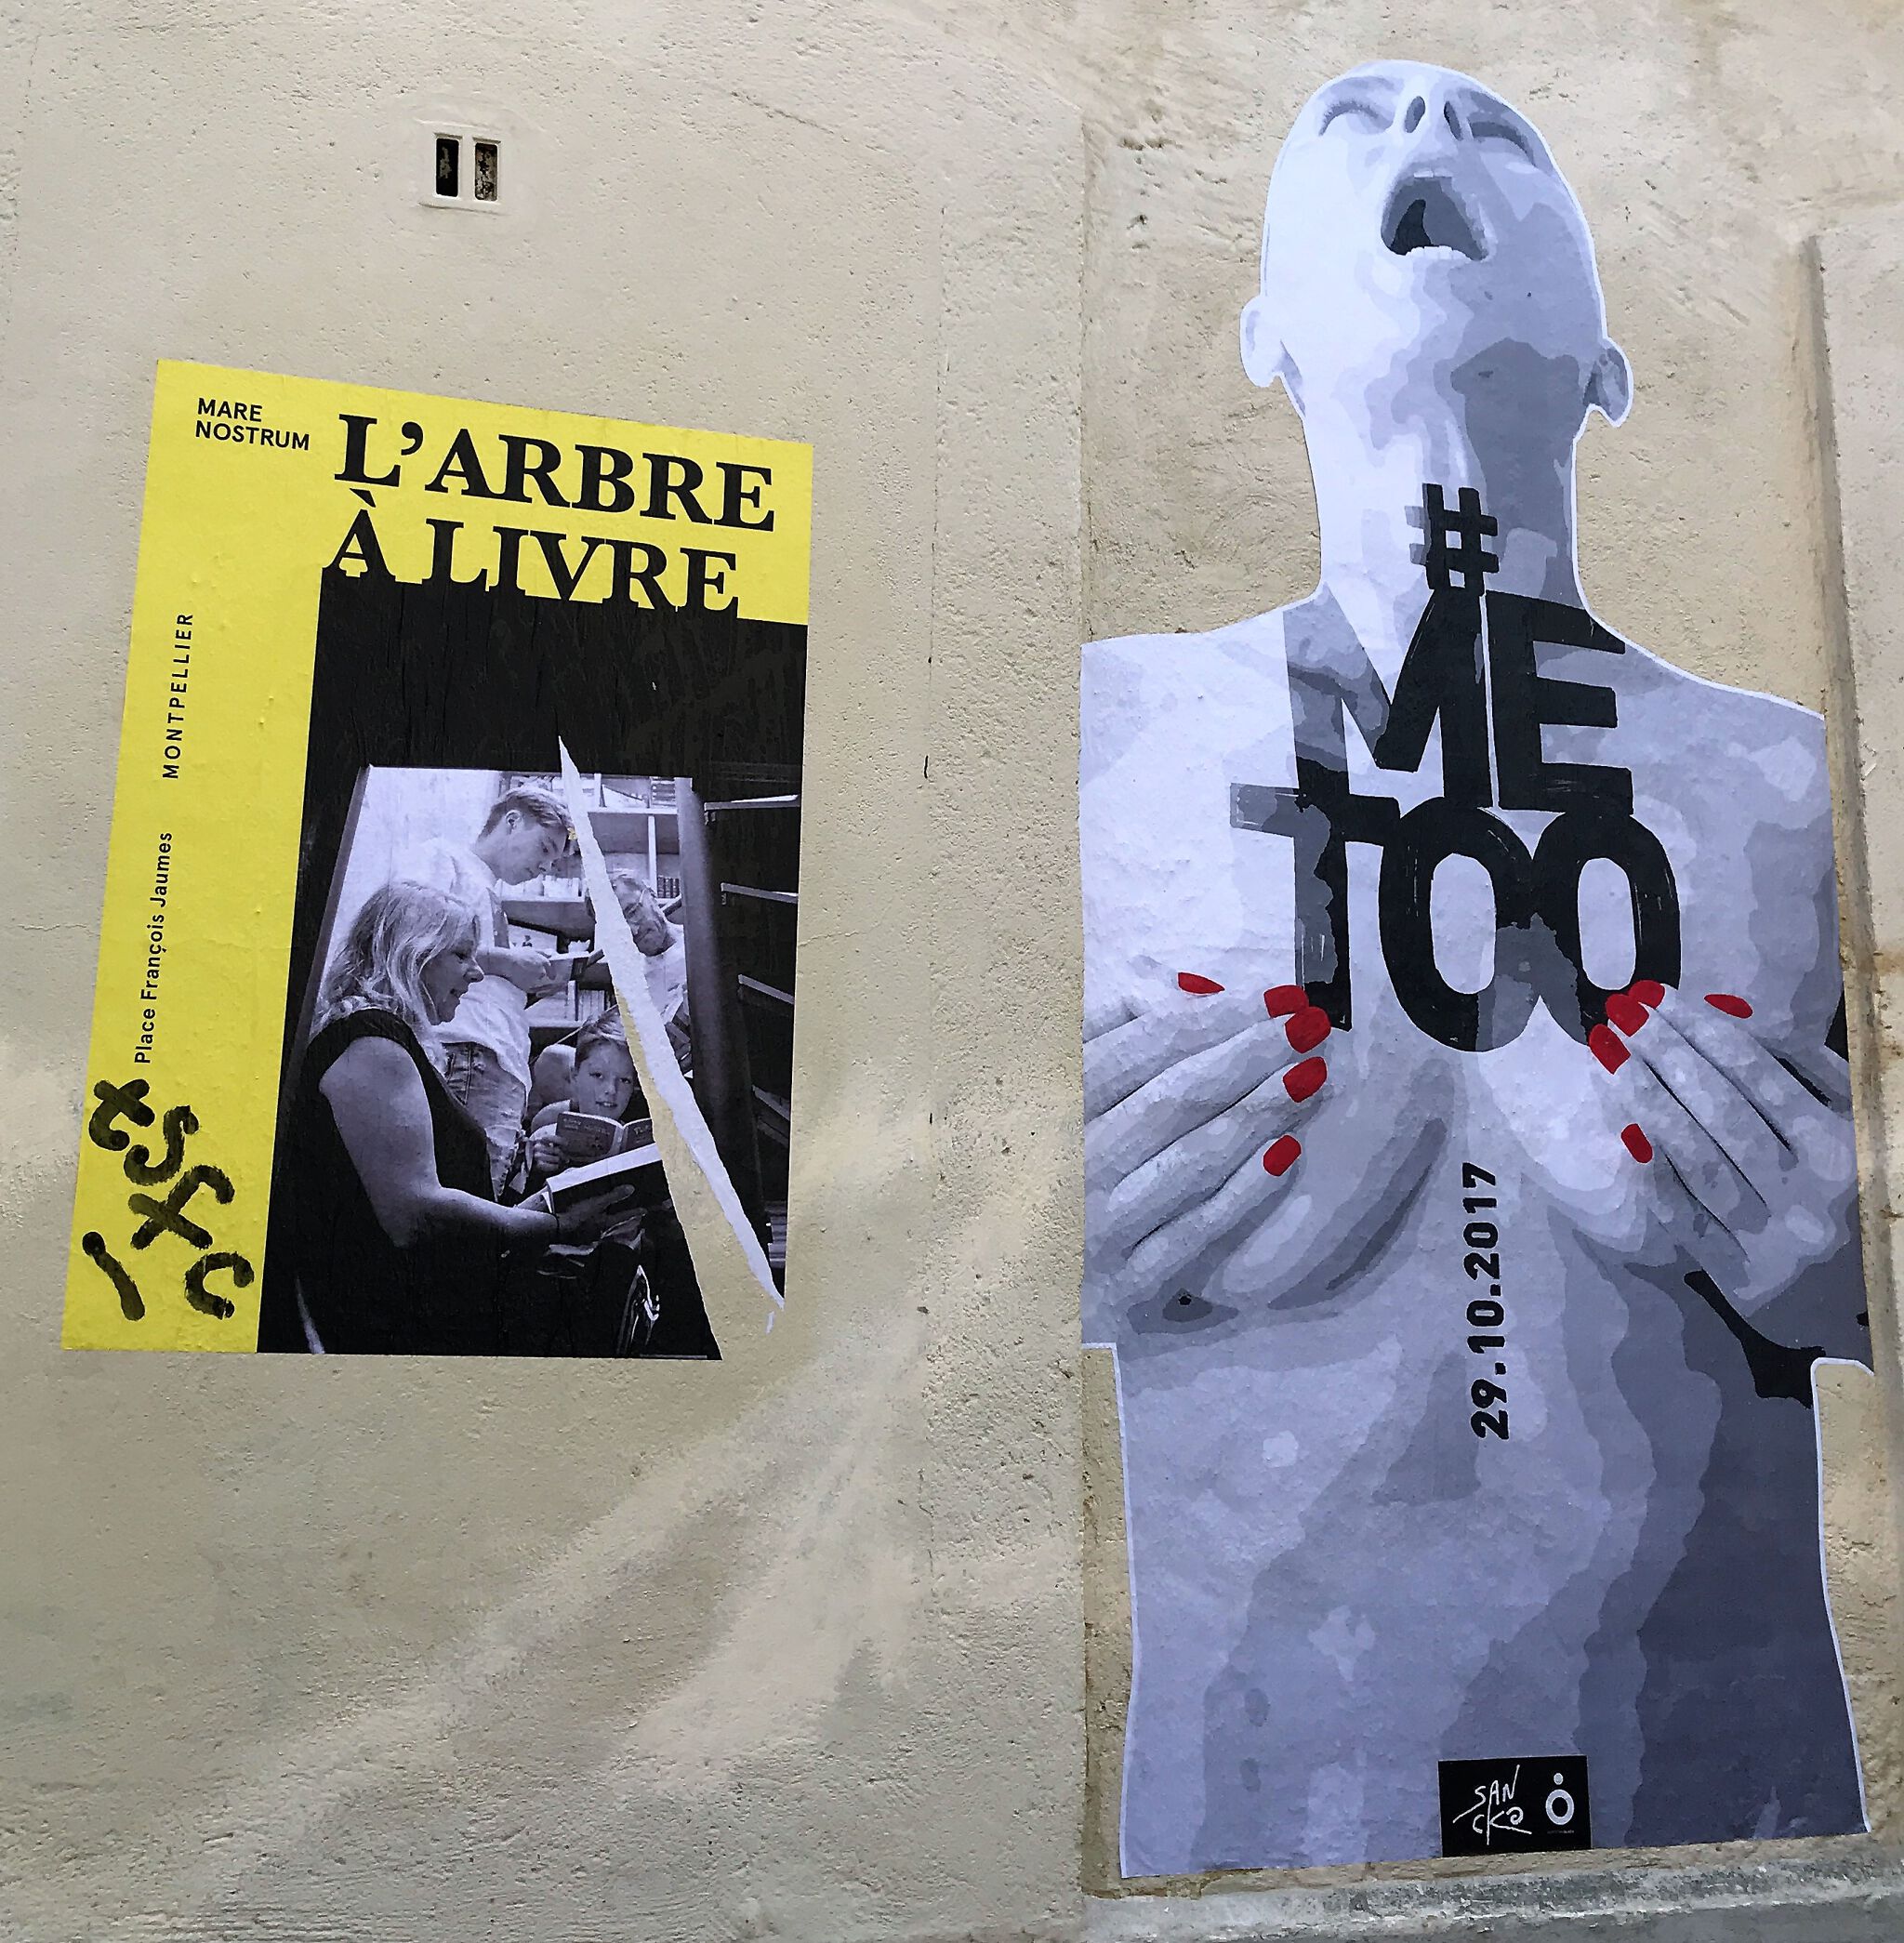 Sancko, Pedro Vetorino&mdash;MeToo Rue d'Alsace